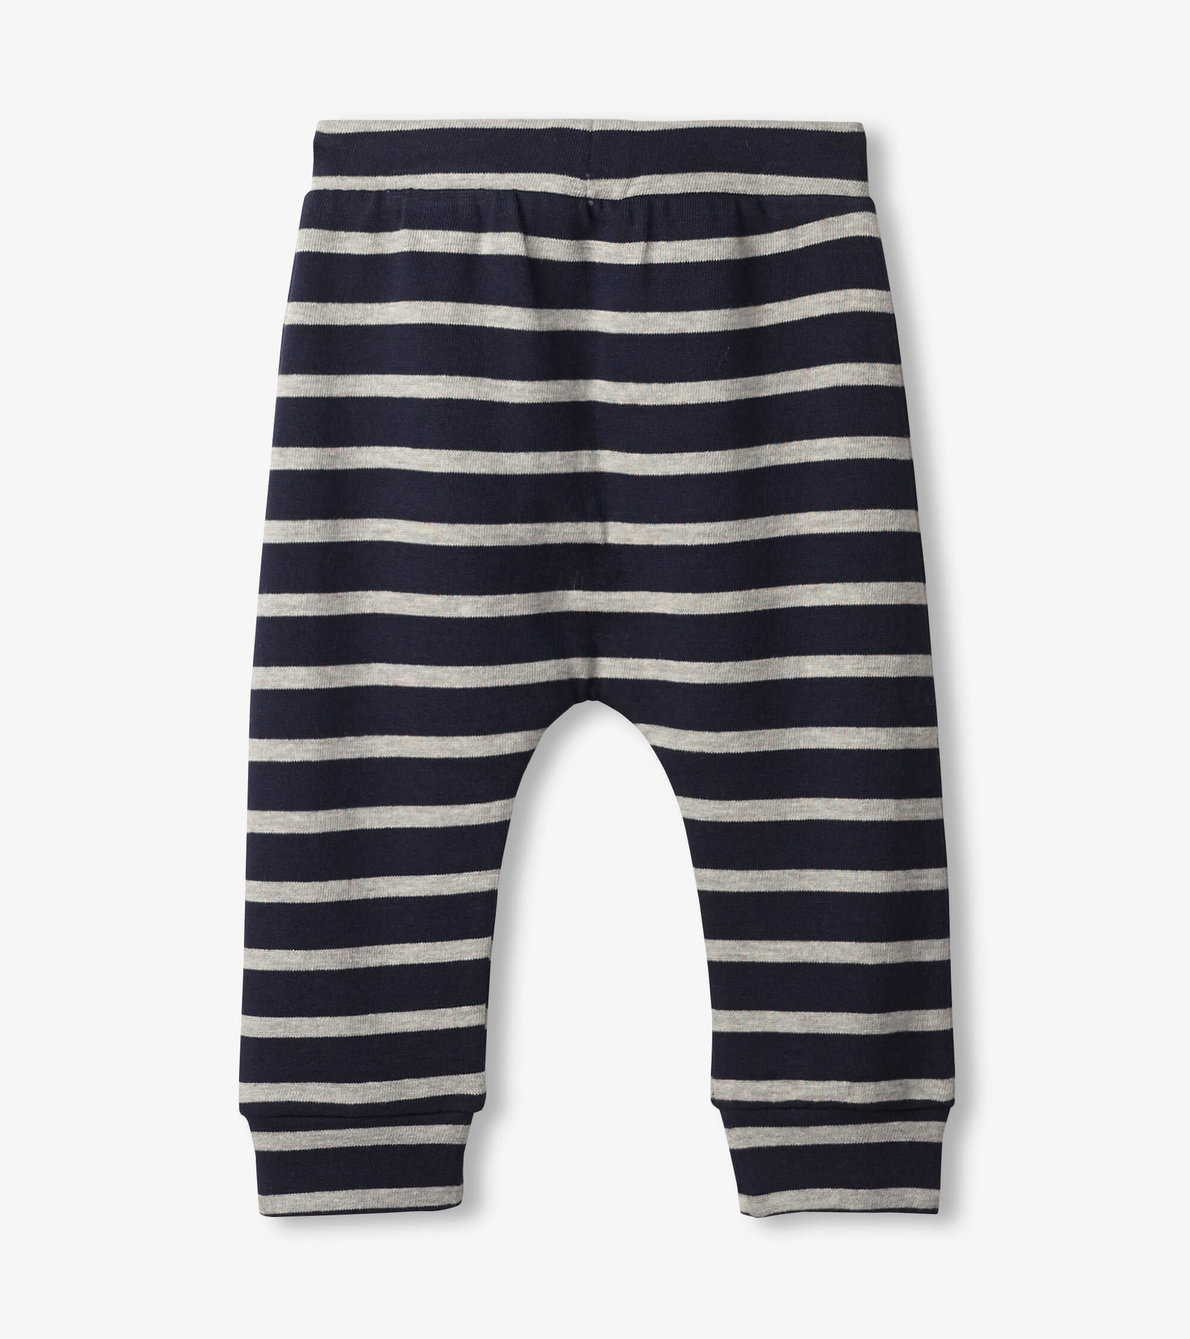 View larger image of Navy and Grey Stripes Baby Kanga Pants